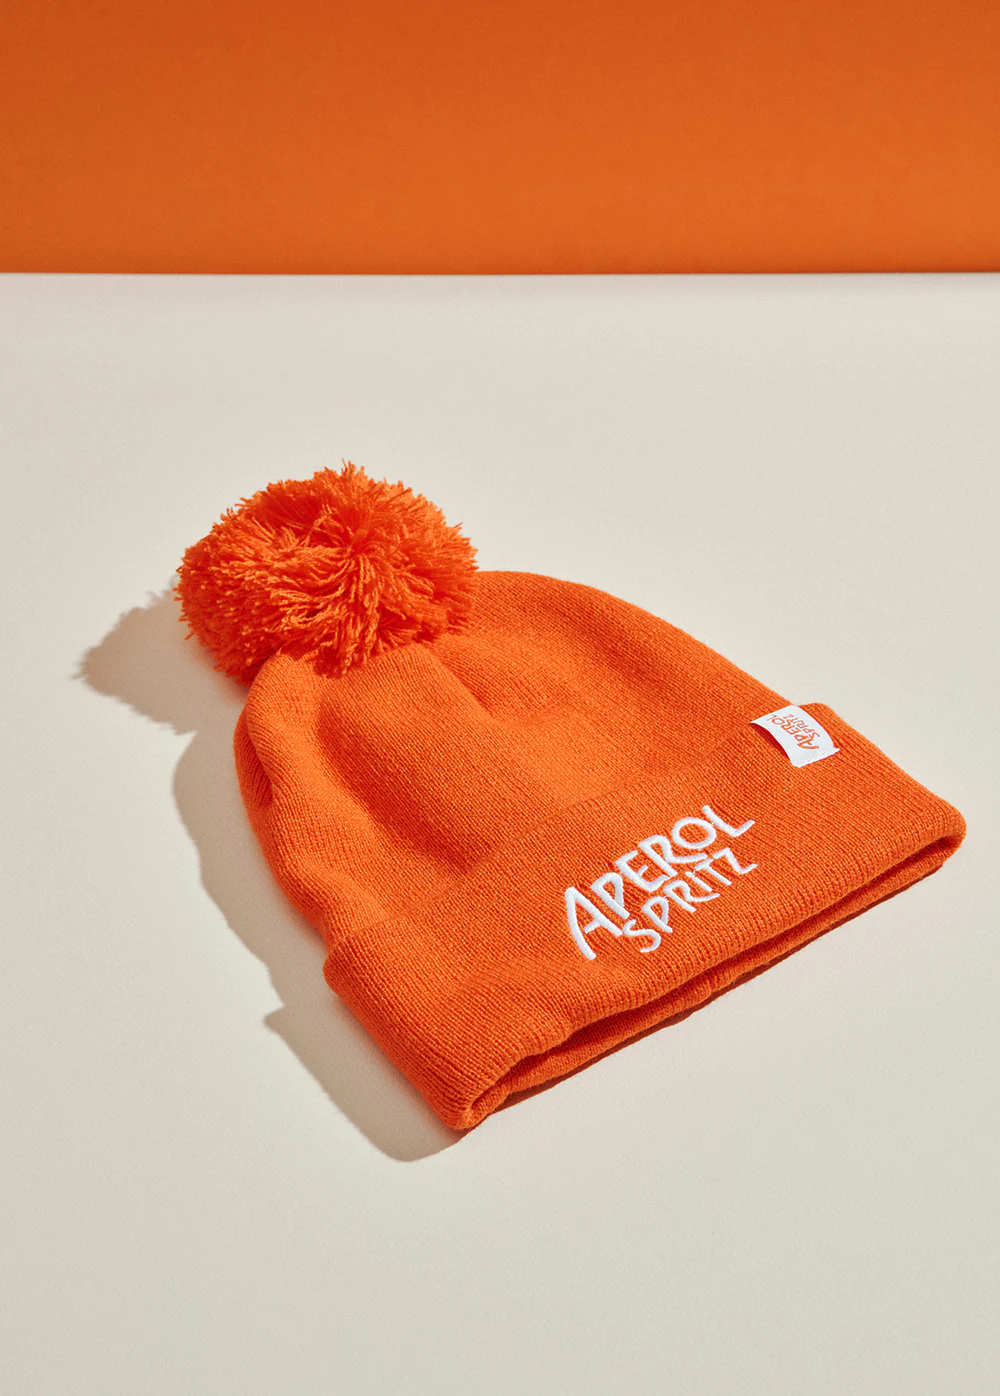 Aperol Winter hat